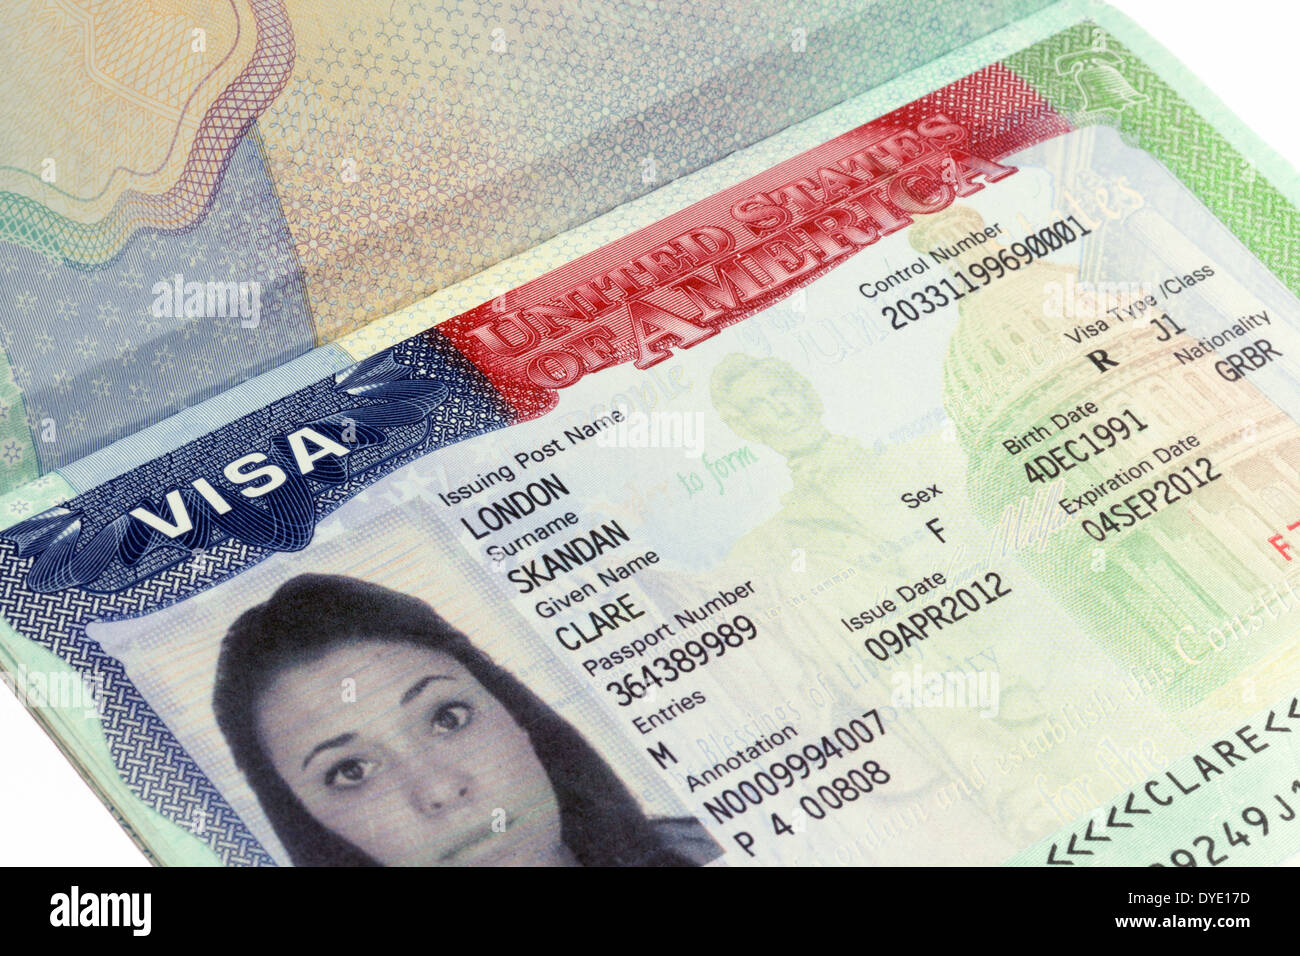 A USA work visa in a passport Stock Photo